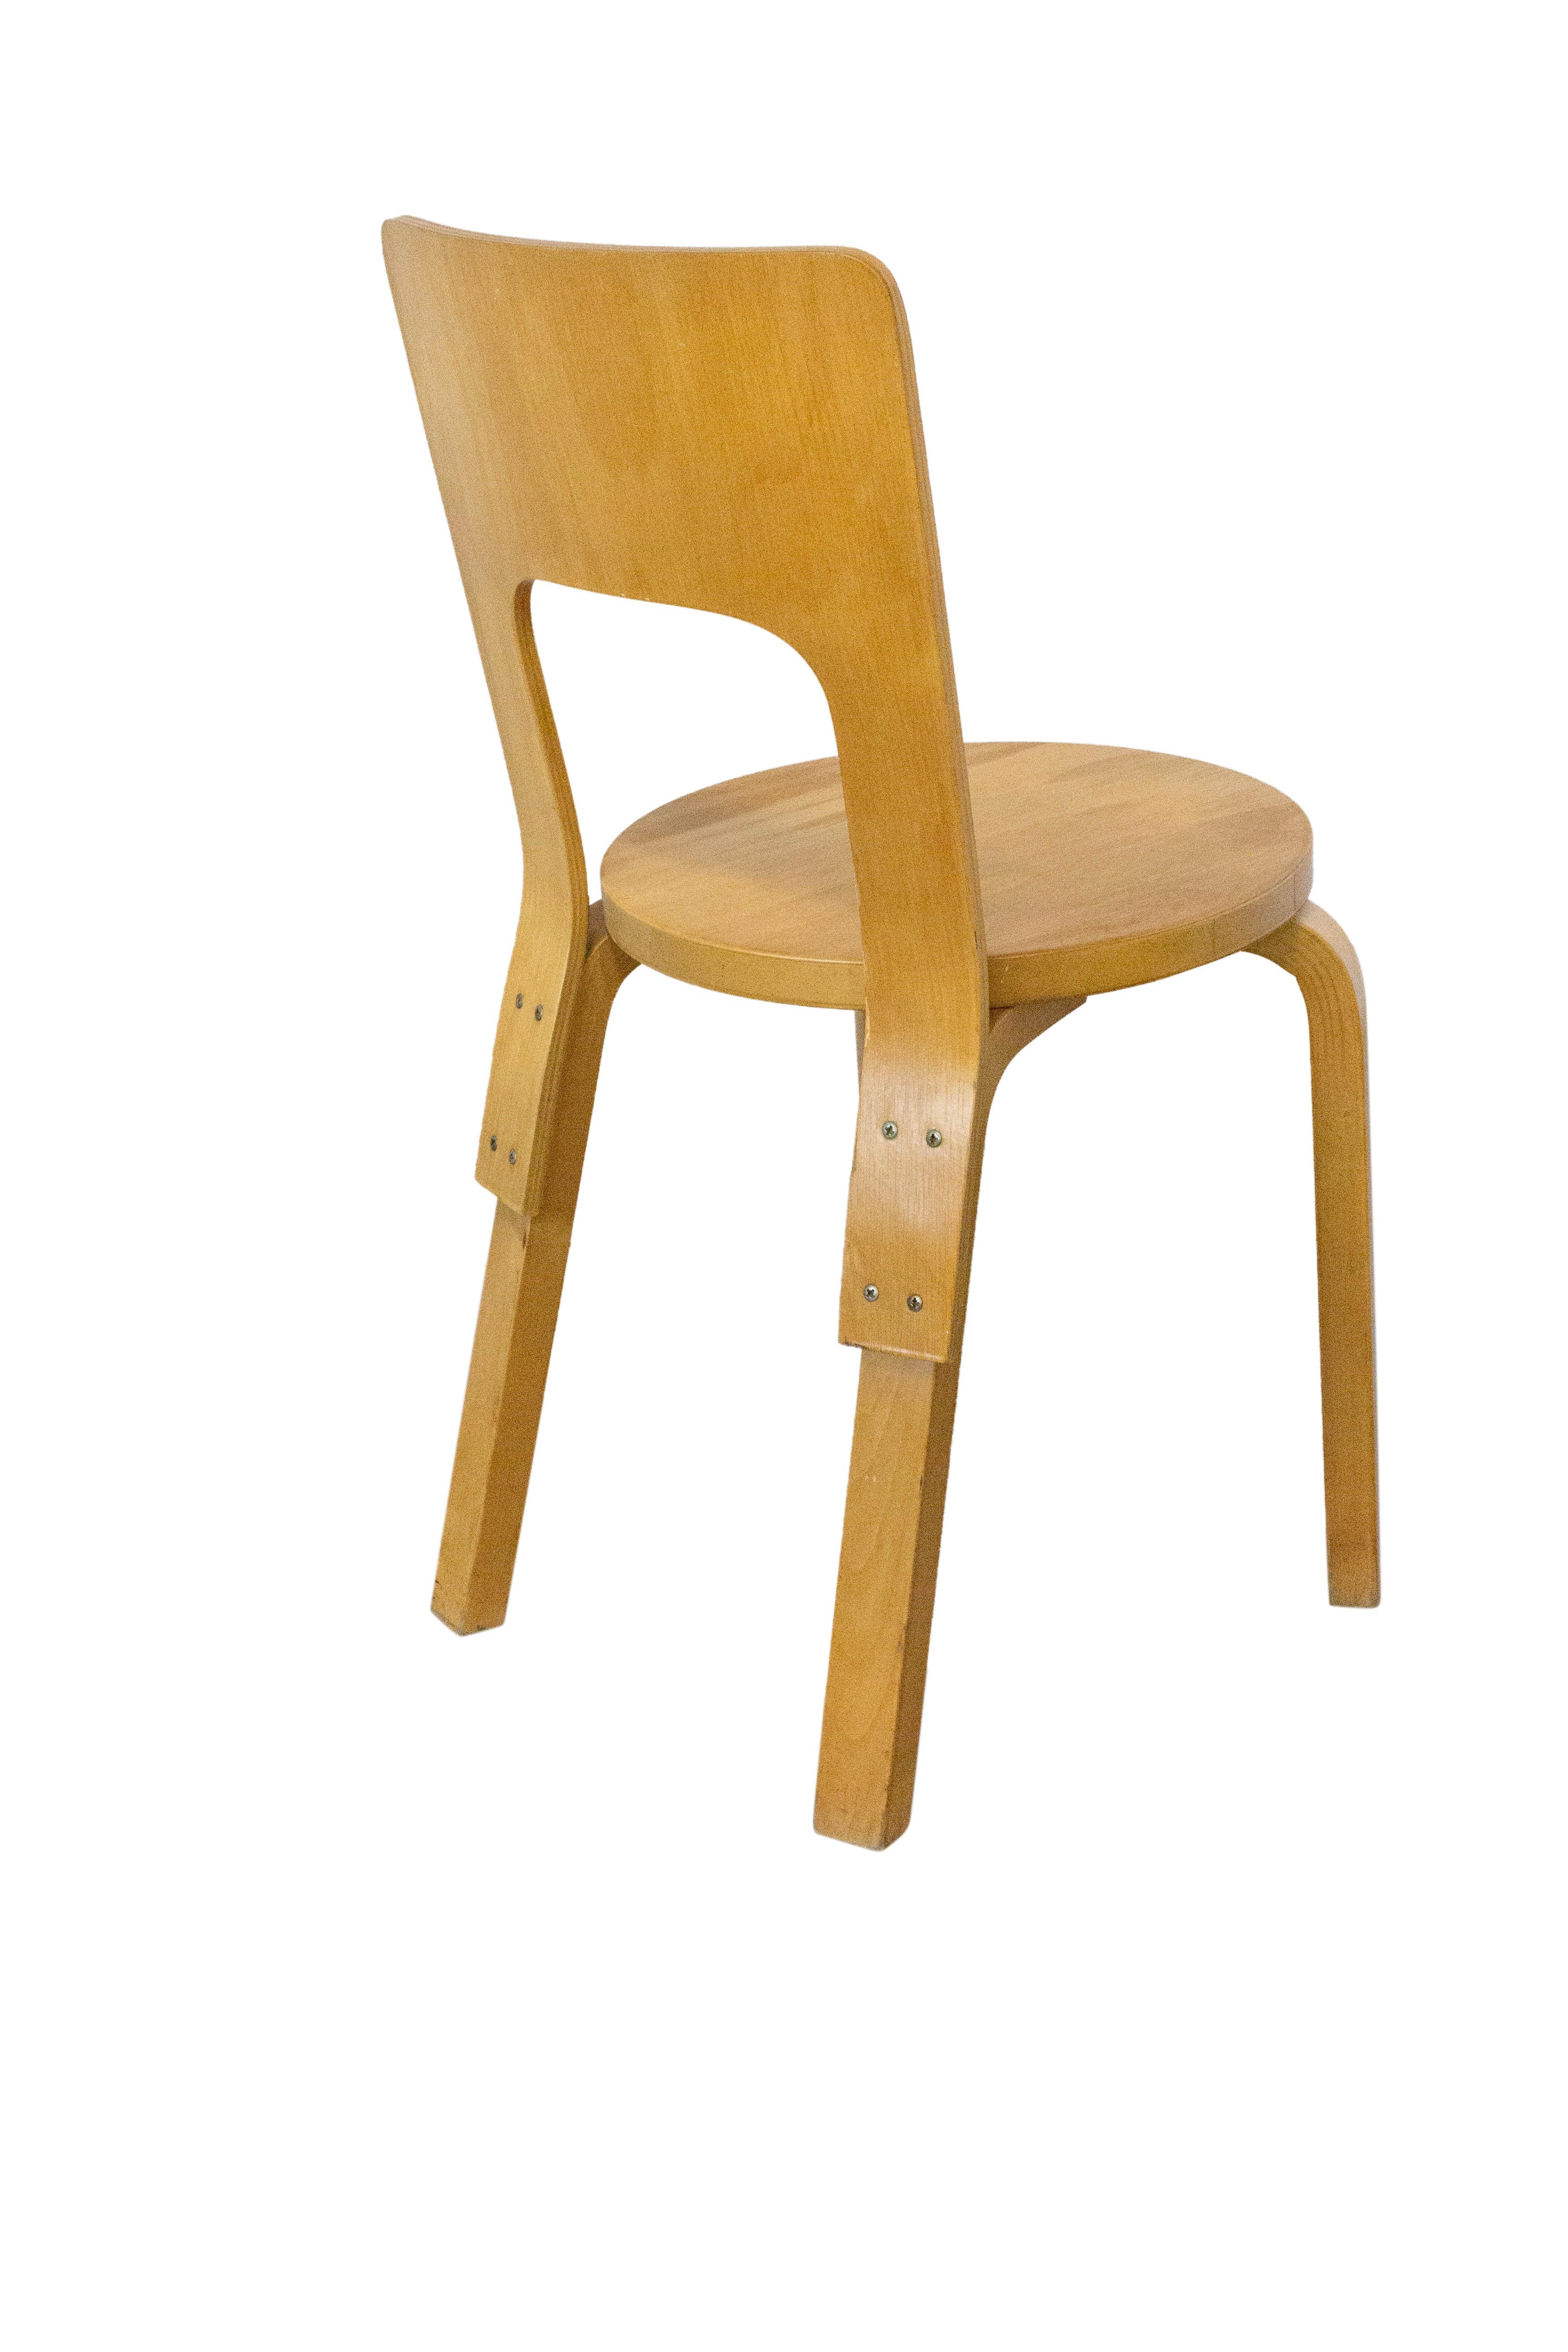 Scandinavian Modern Finnish Vintage Wood Chair Alvar Aalto Model 66, circa 1930 For Sale